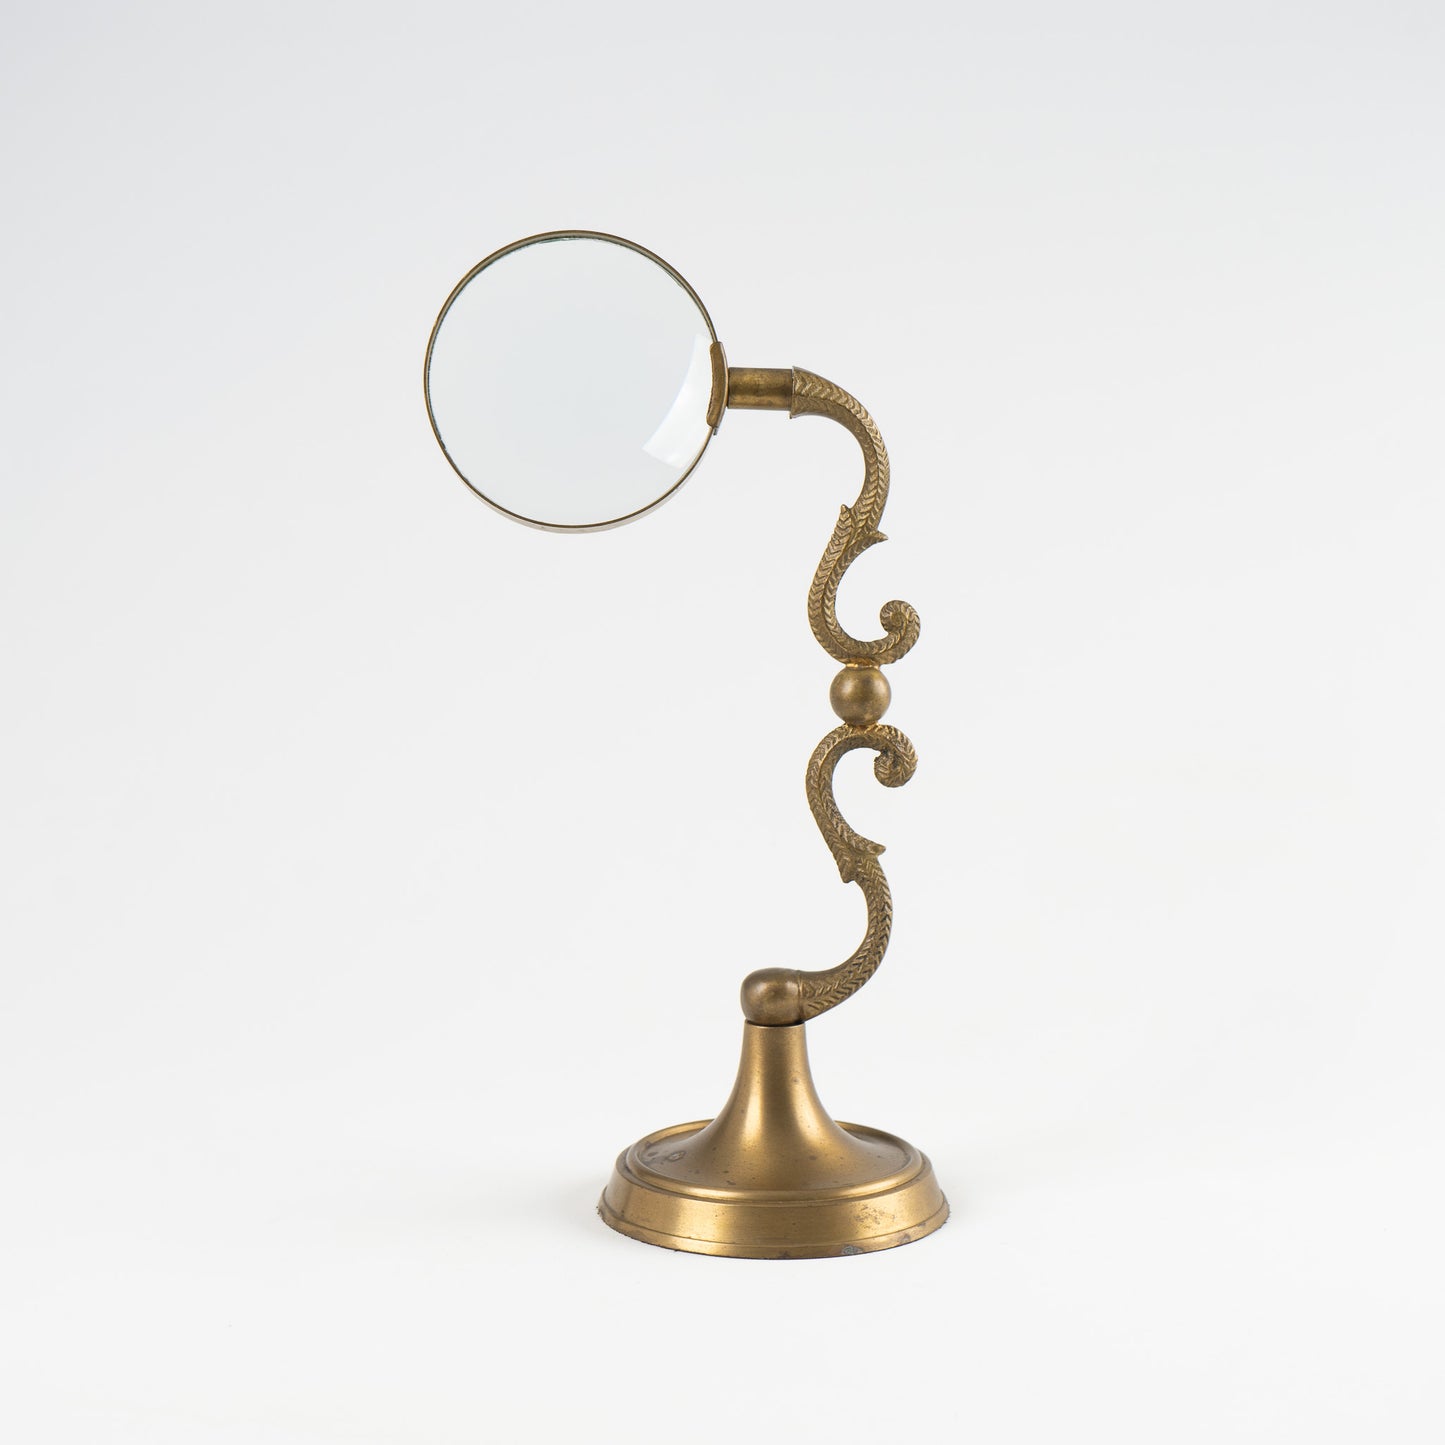 Vintage Brass Magnifying Glass - in original brass patina